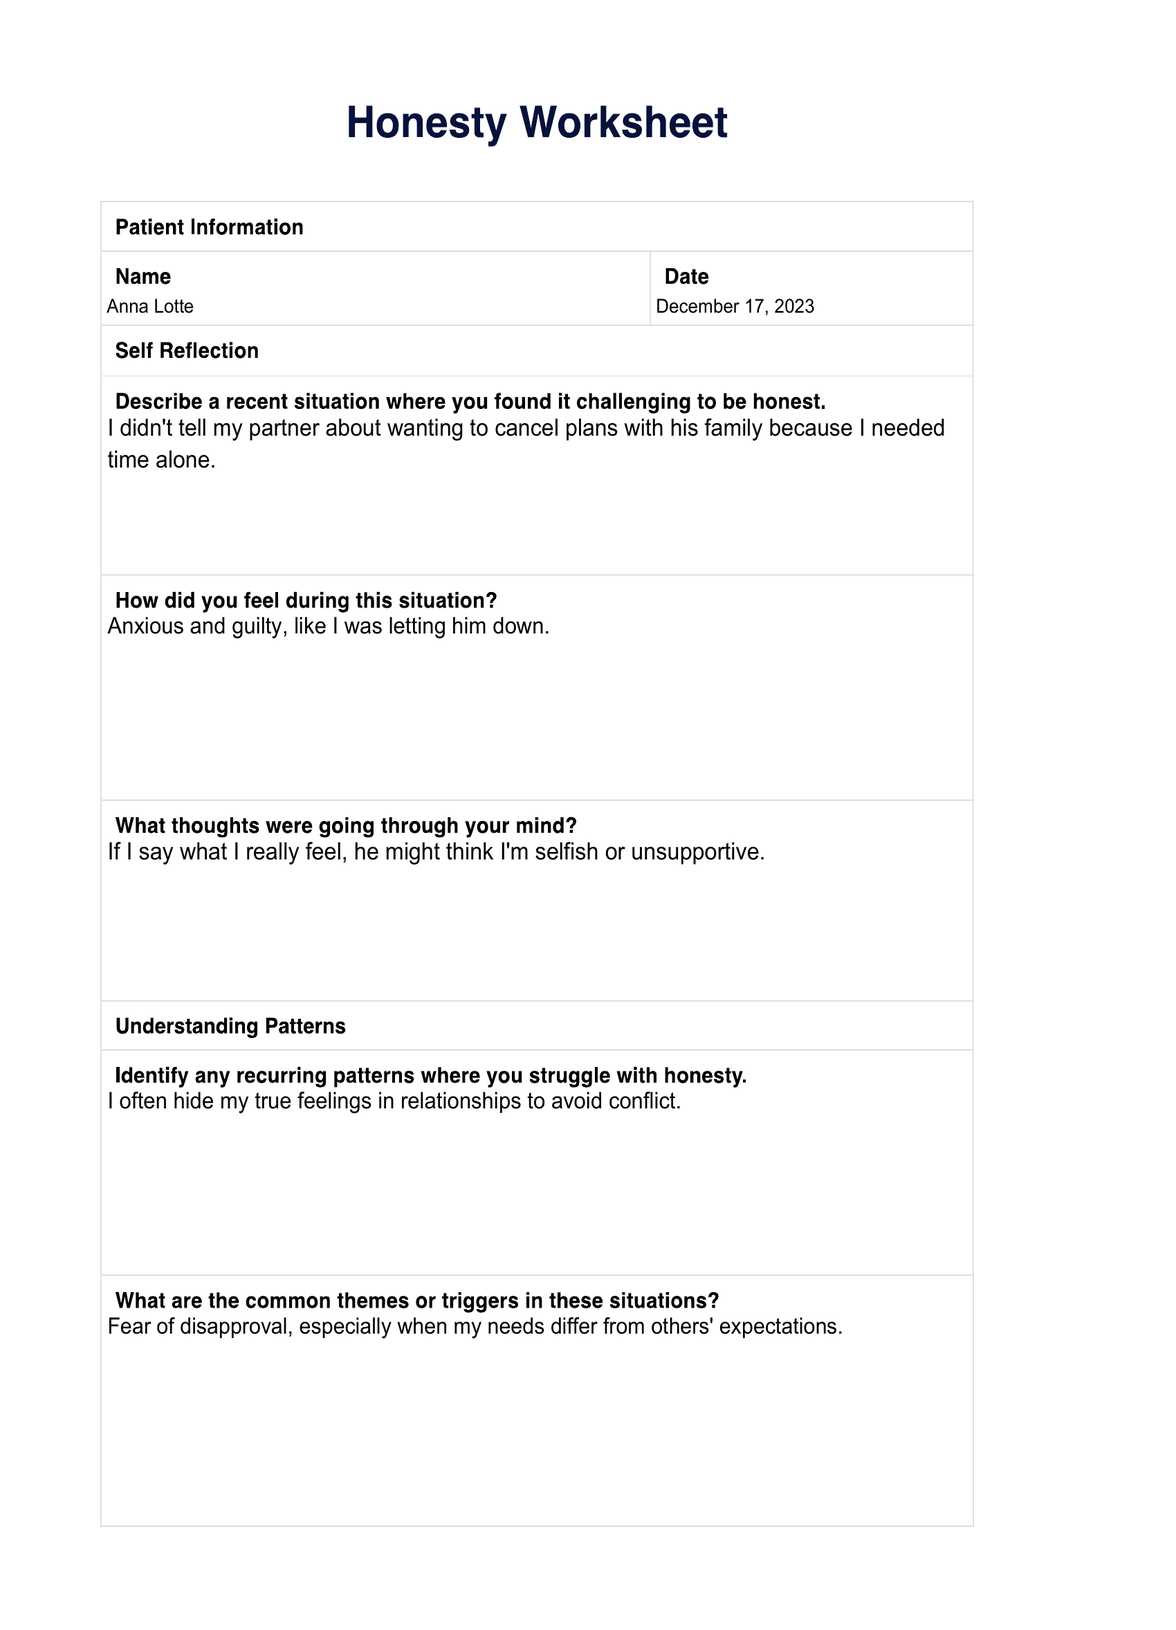 Honesty Worksheets PDF Example